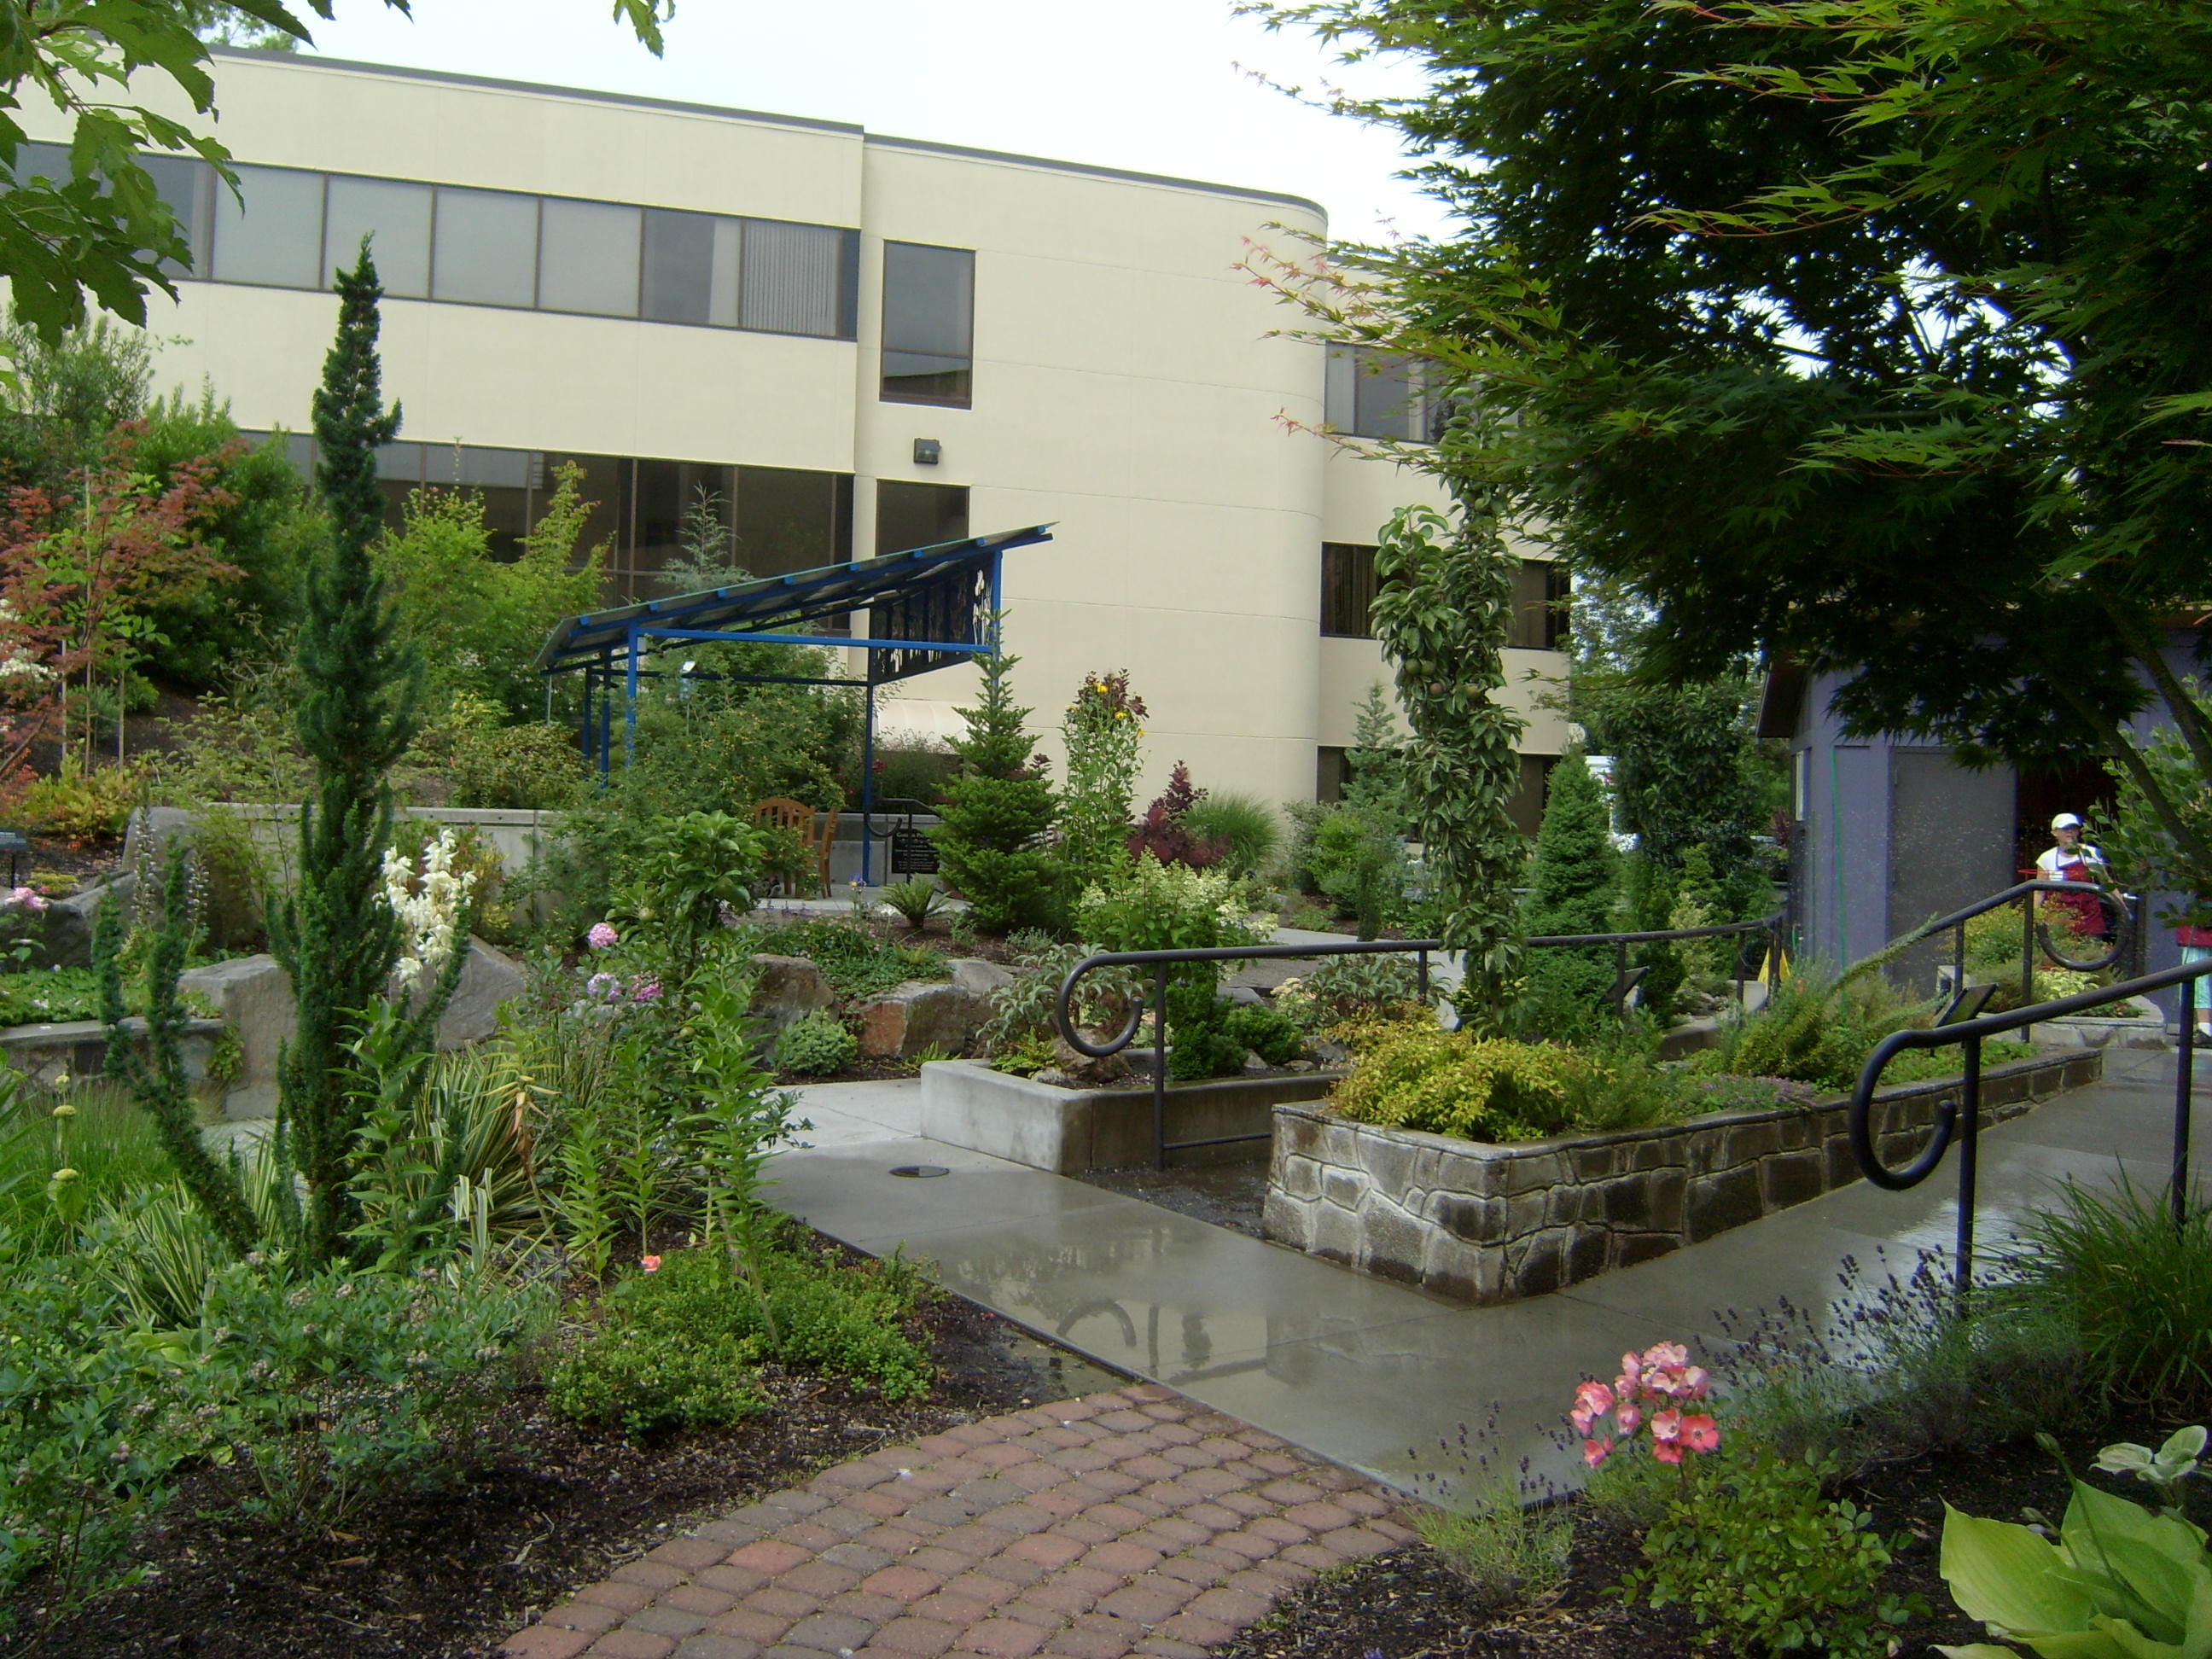 Meridian Park Medical Center garden patio view with gazeebo